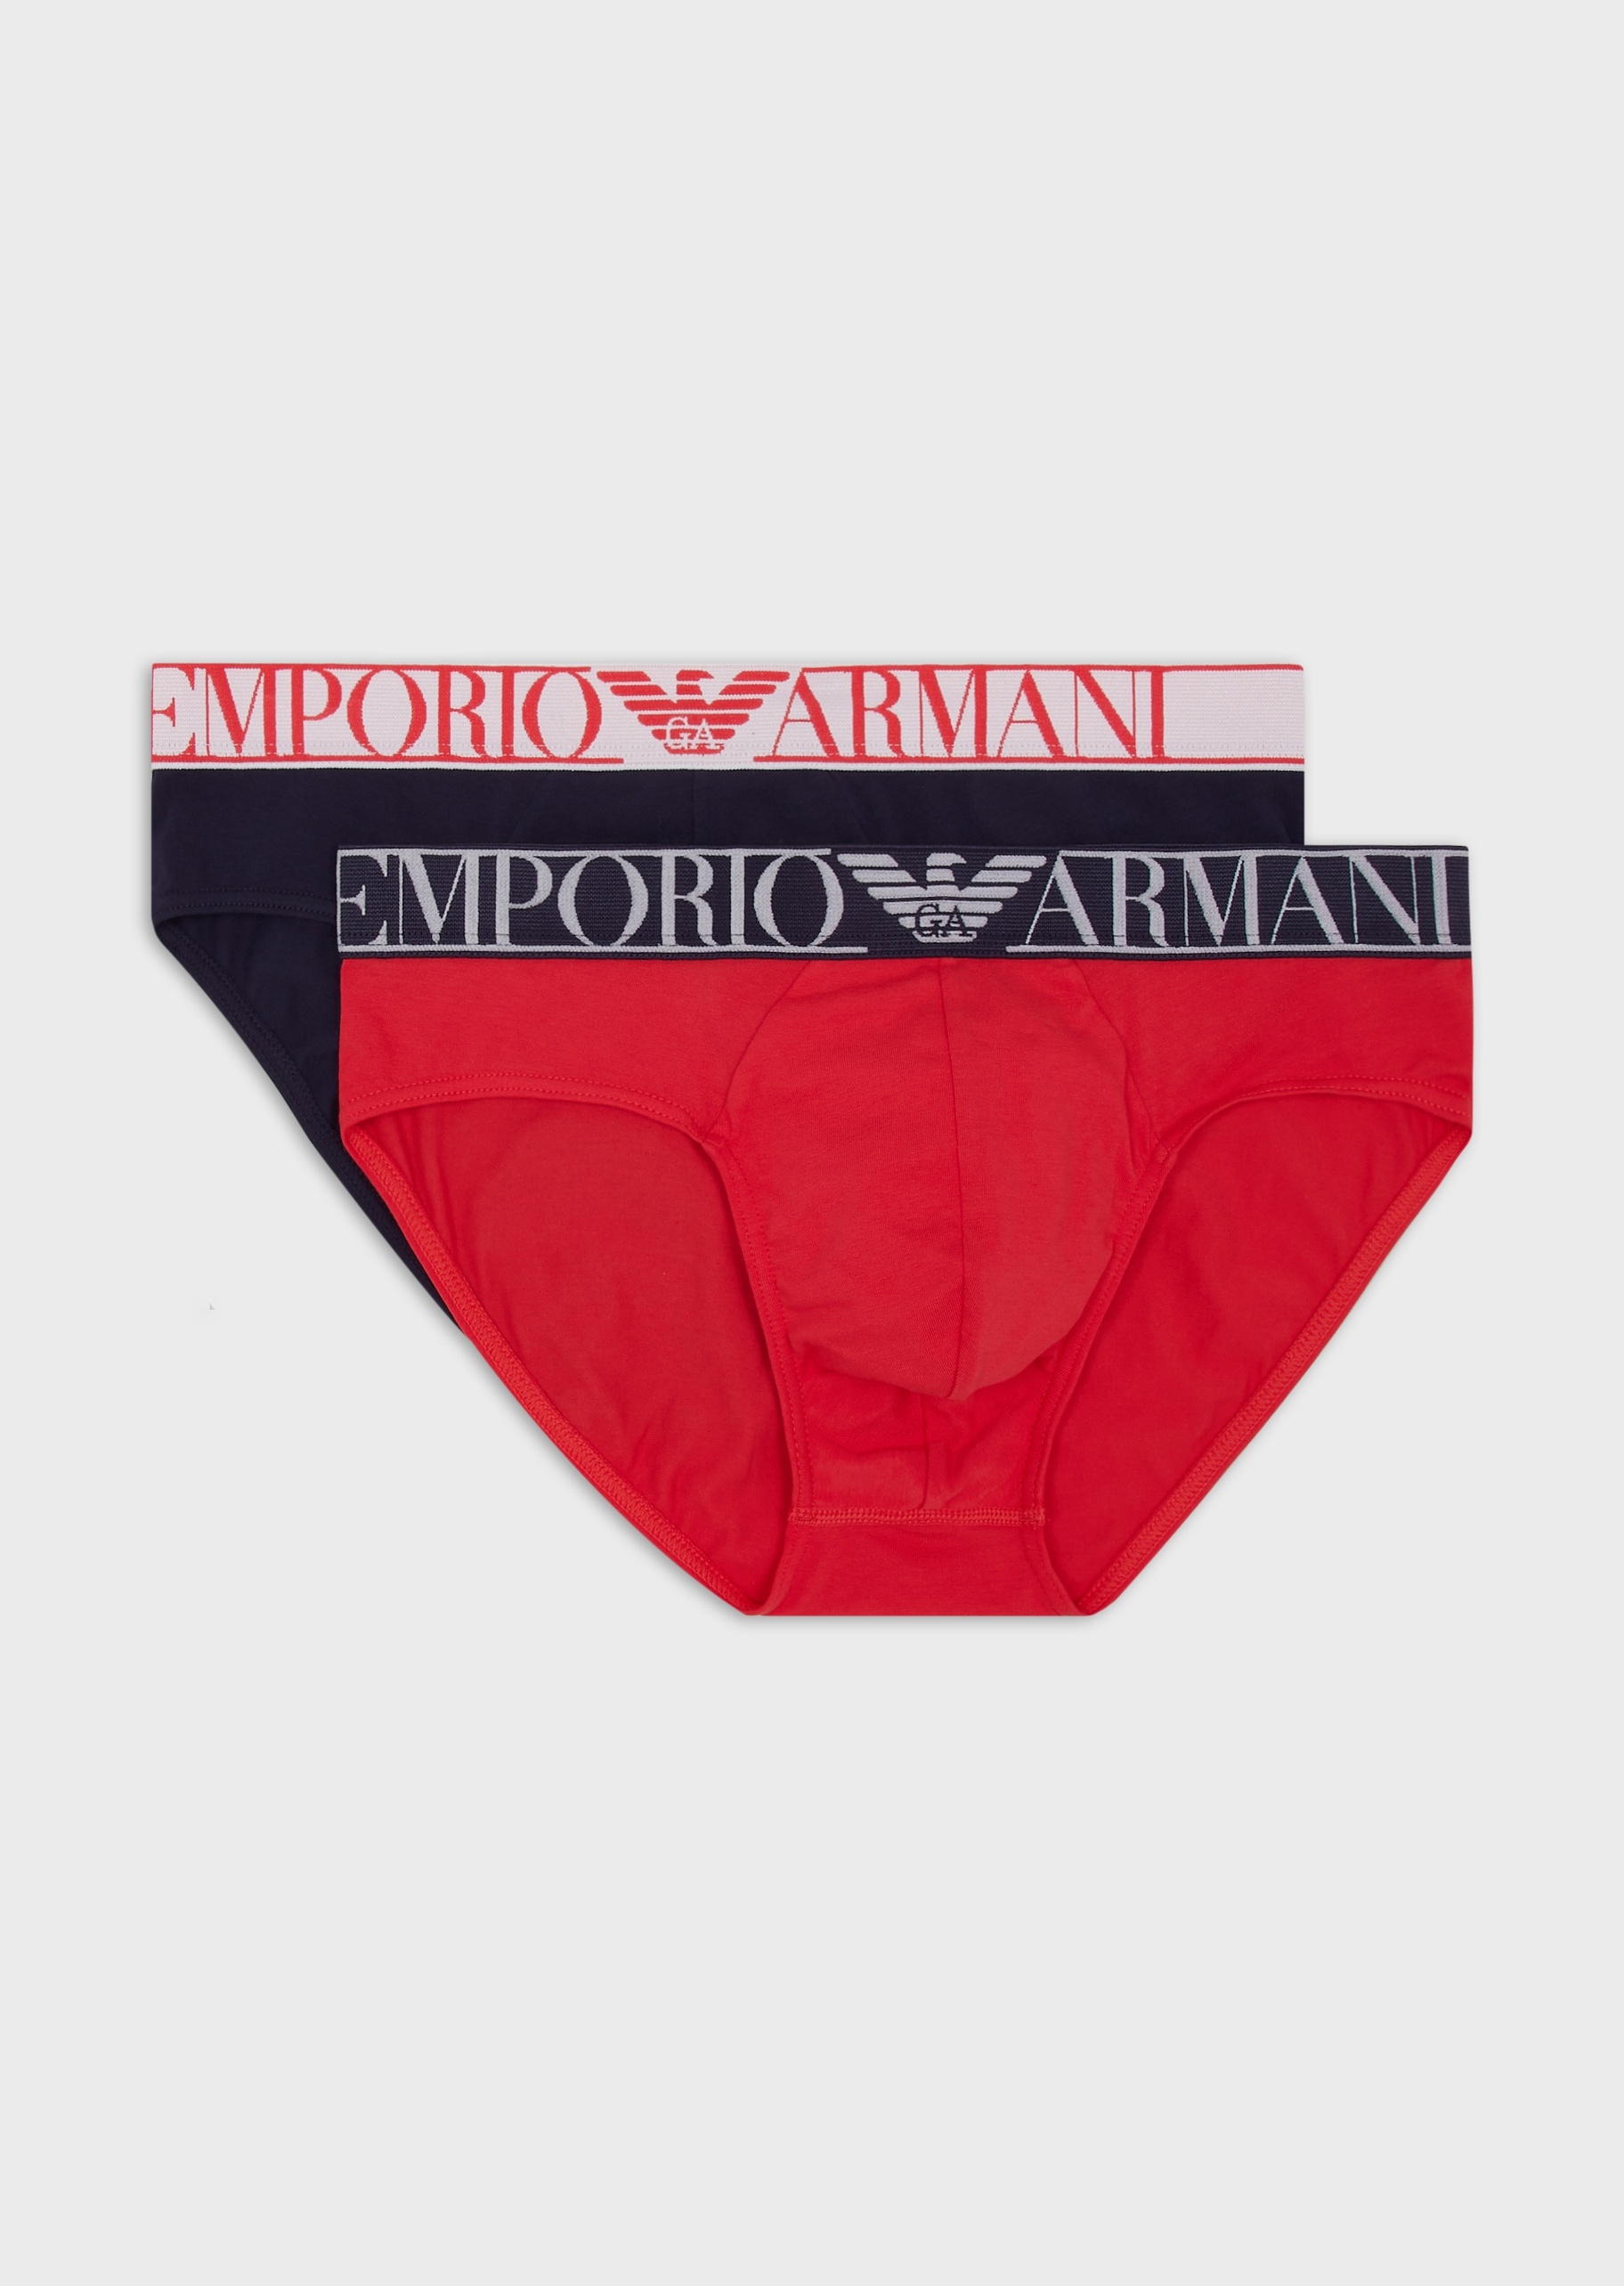 Emporio Armani 松紧标识腰带内裤套装